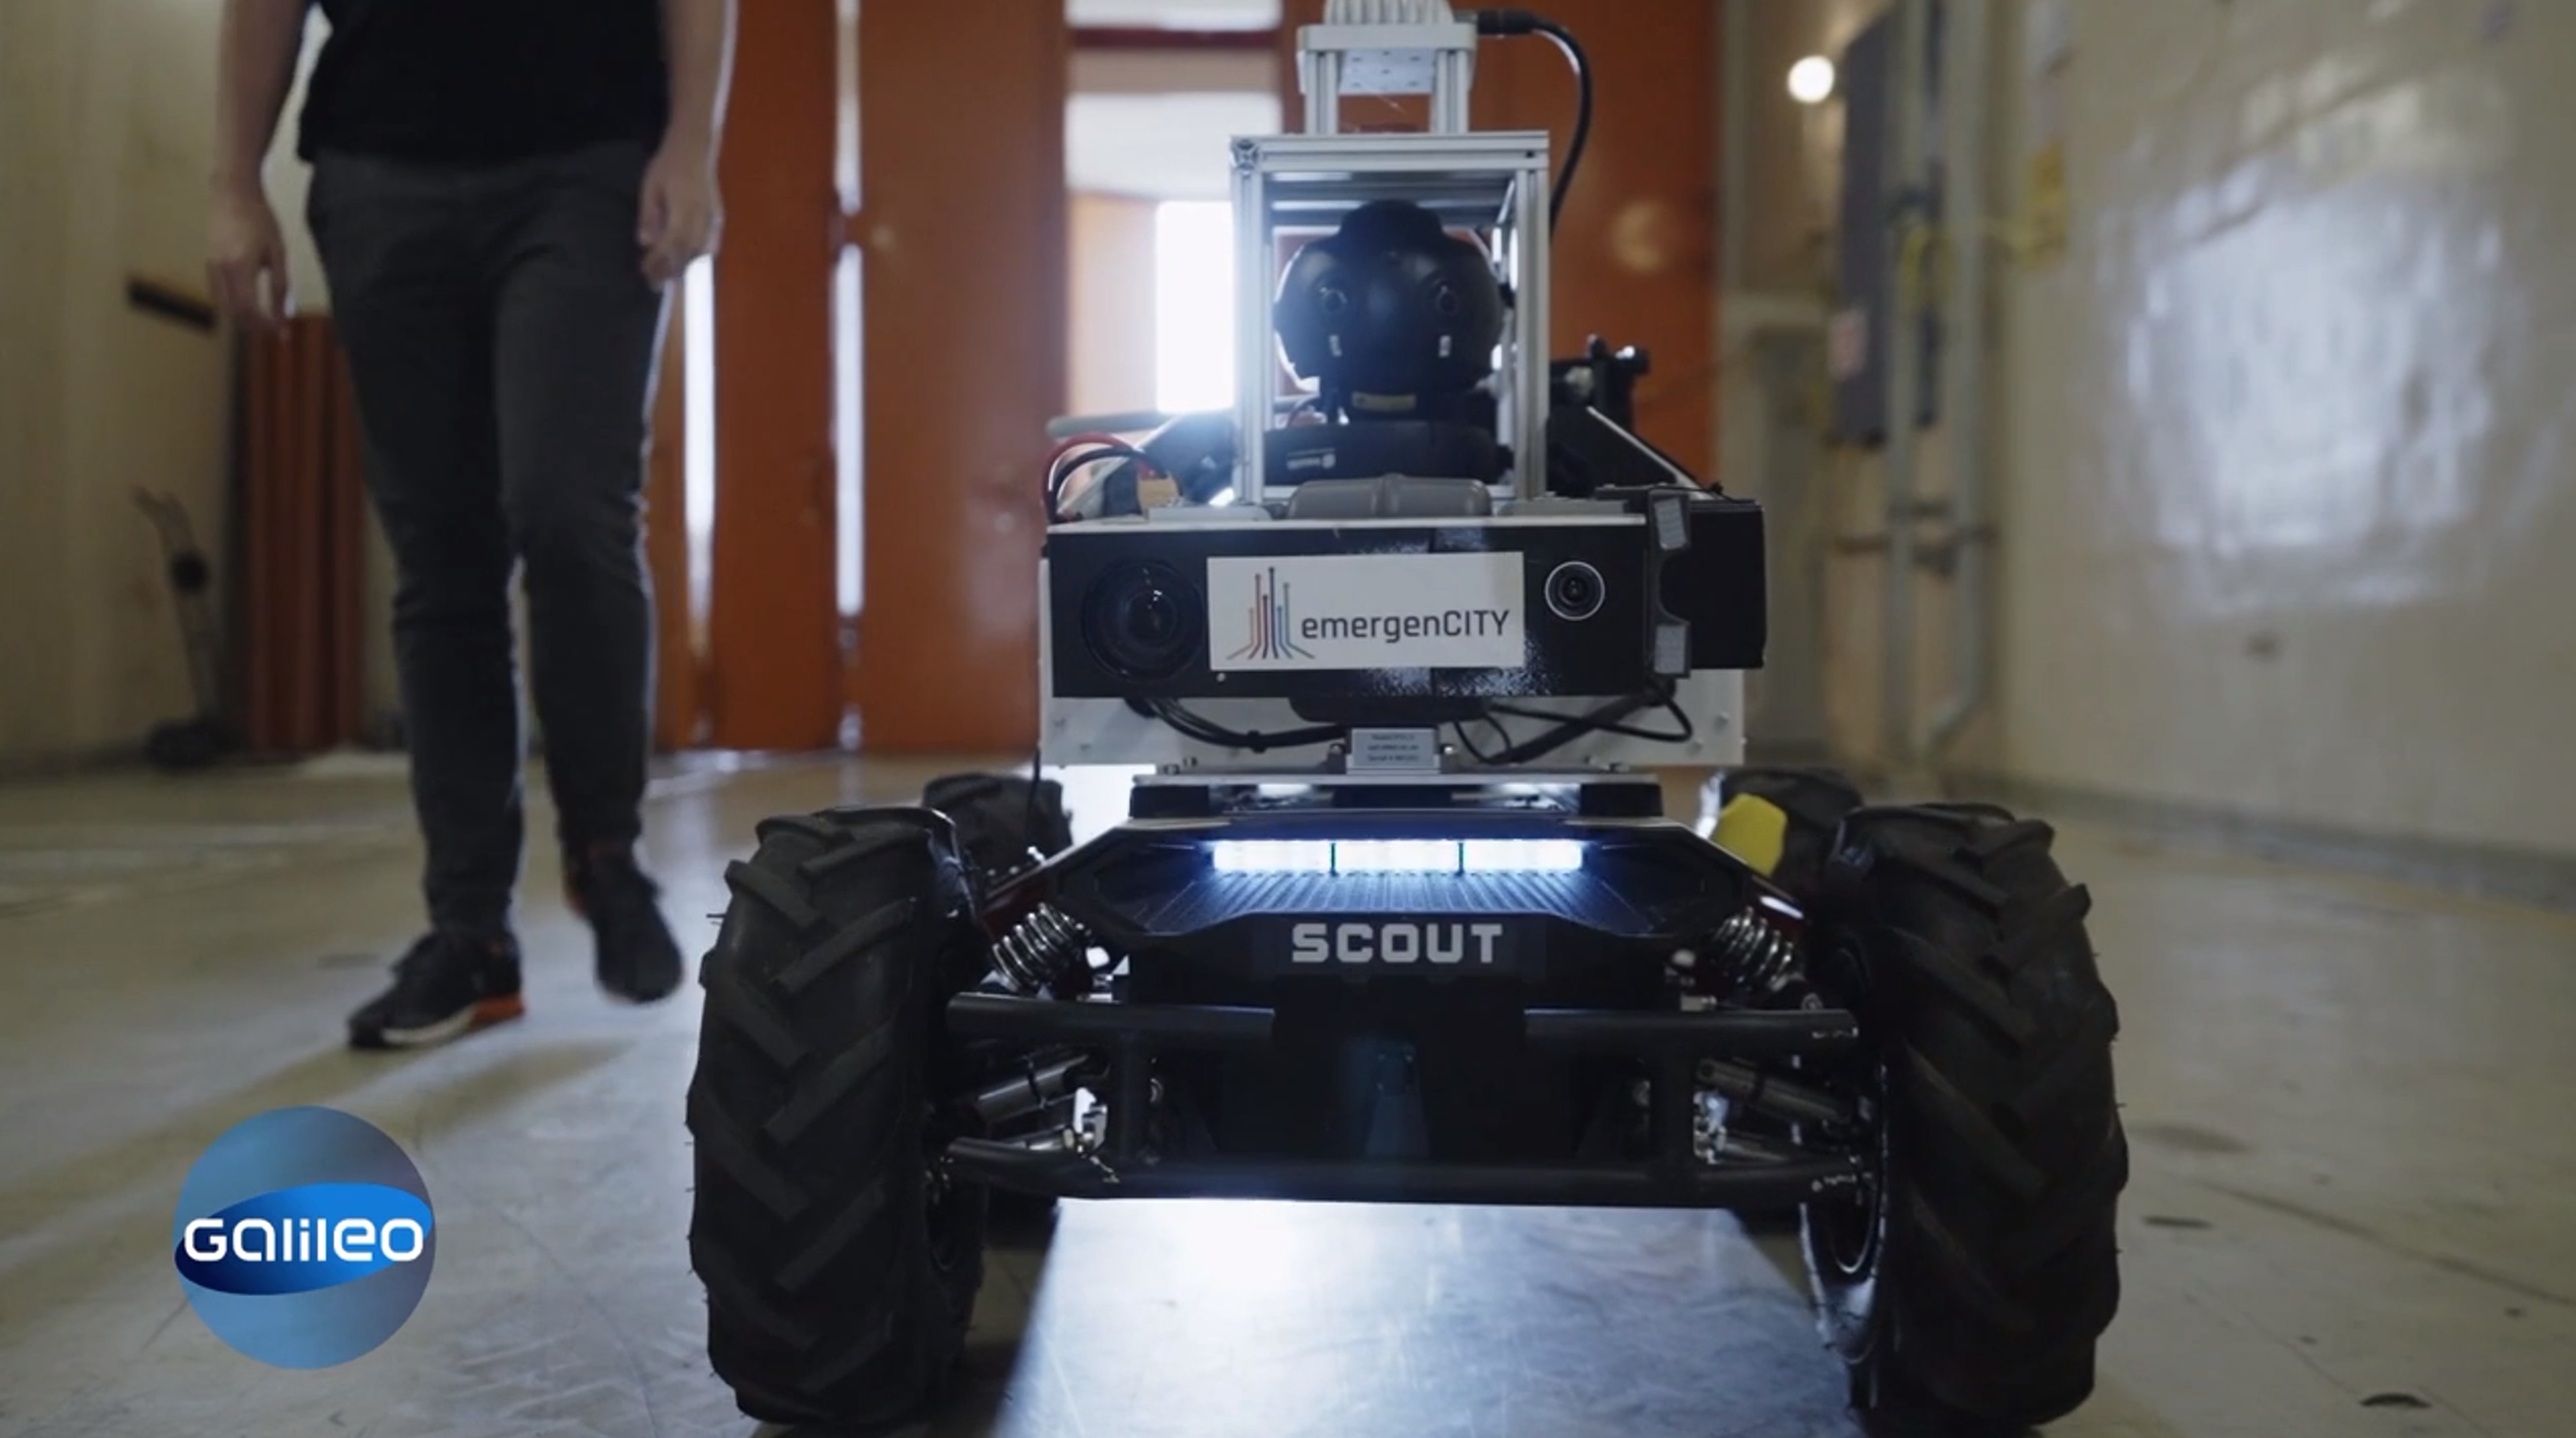 emergenCITY Robot Scout at Galileo